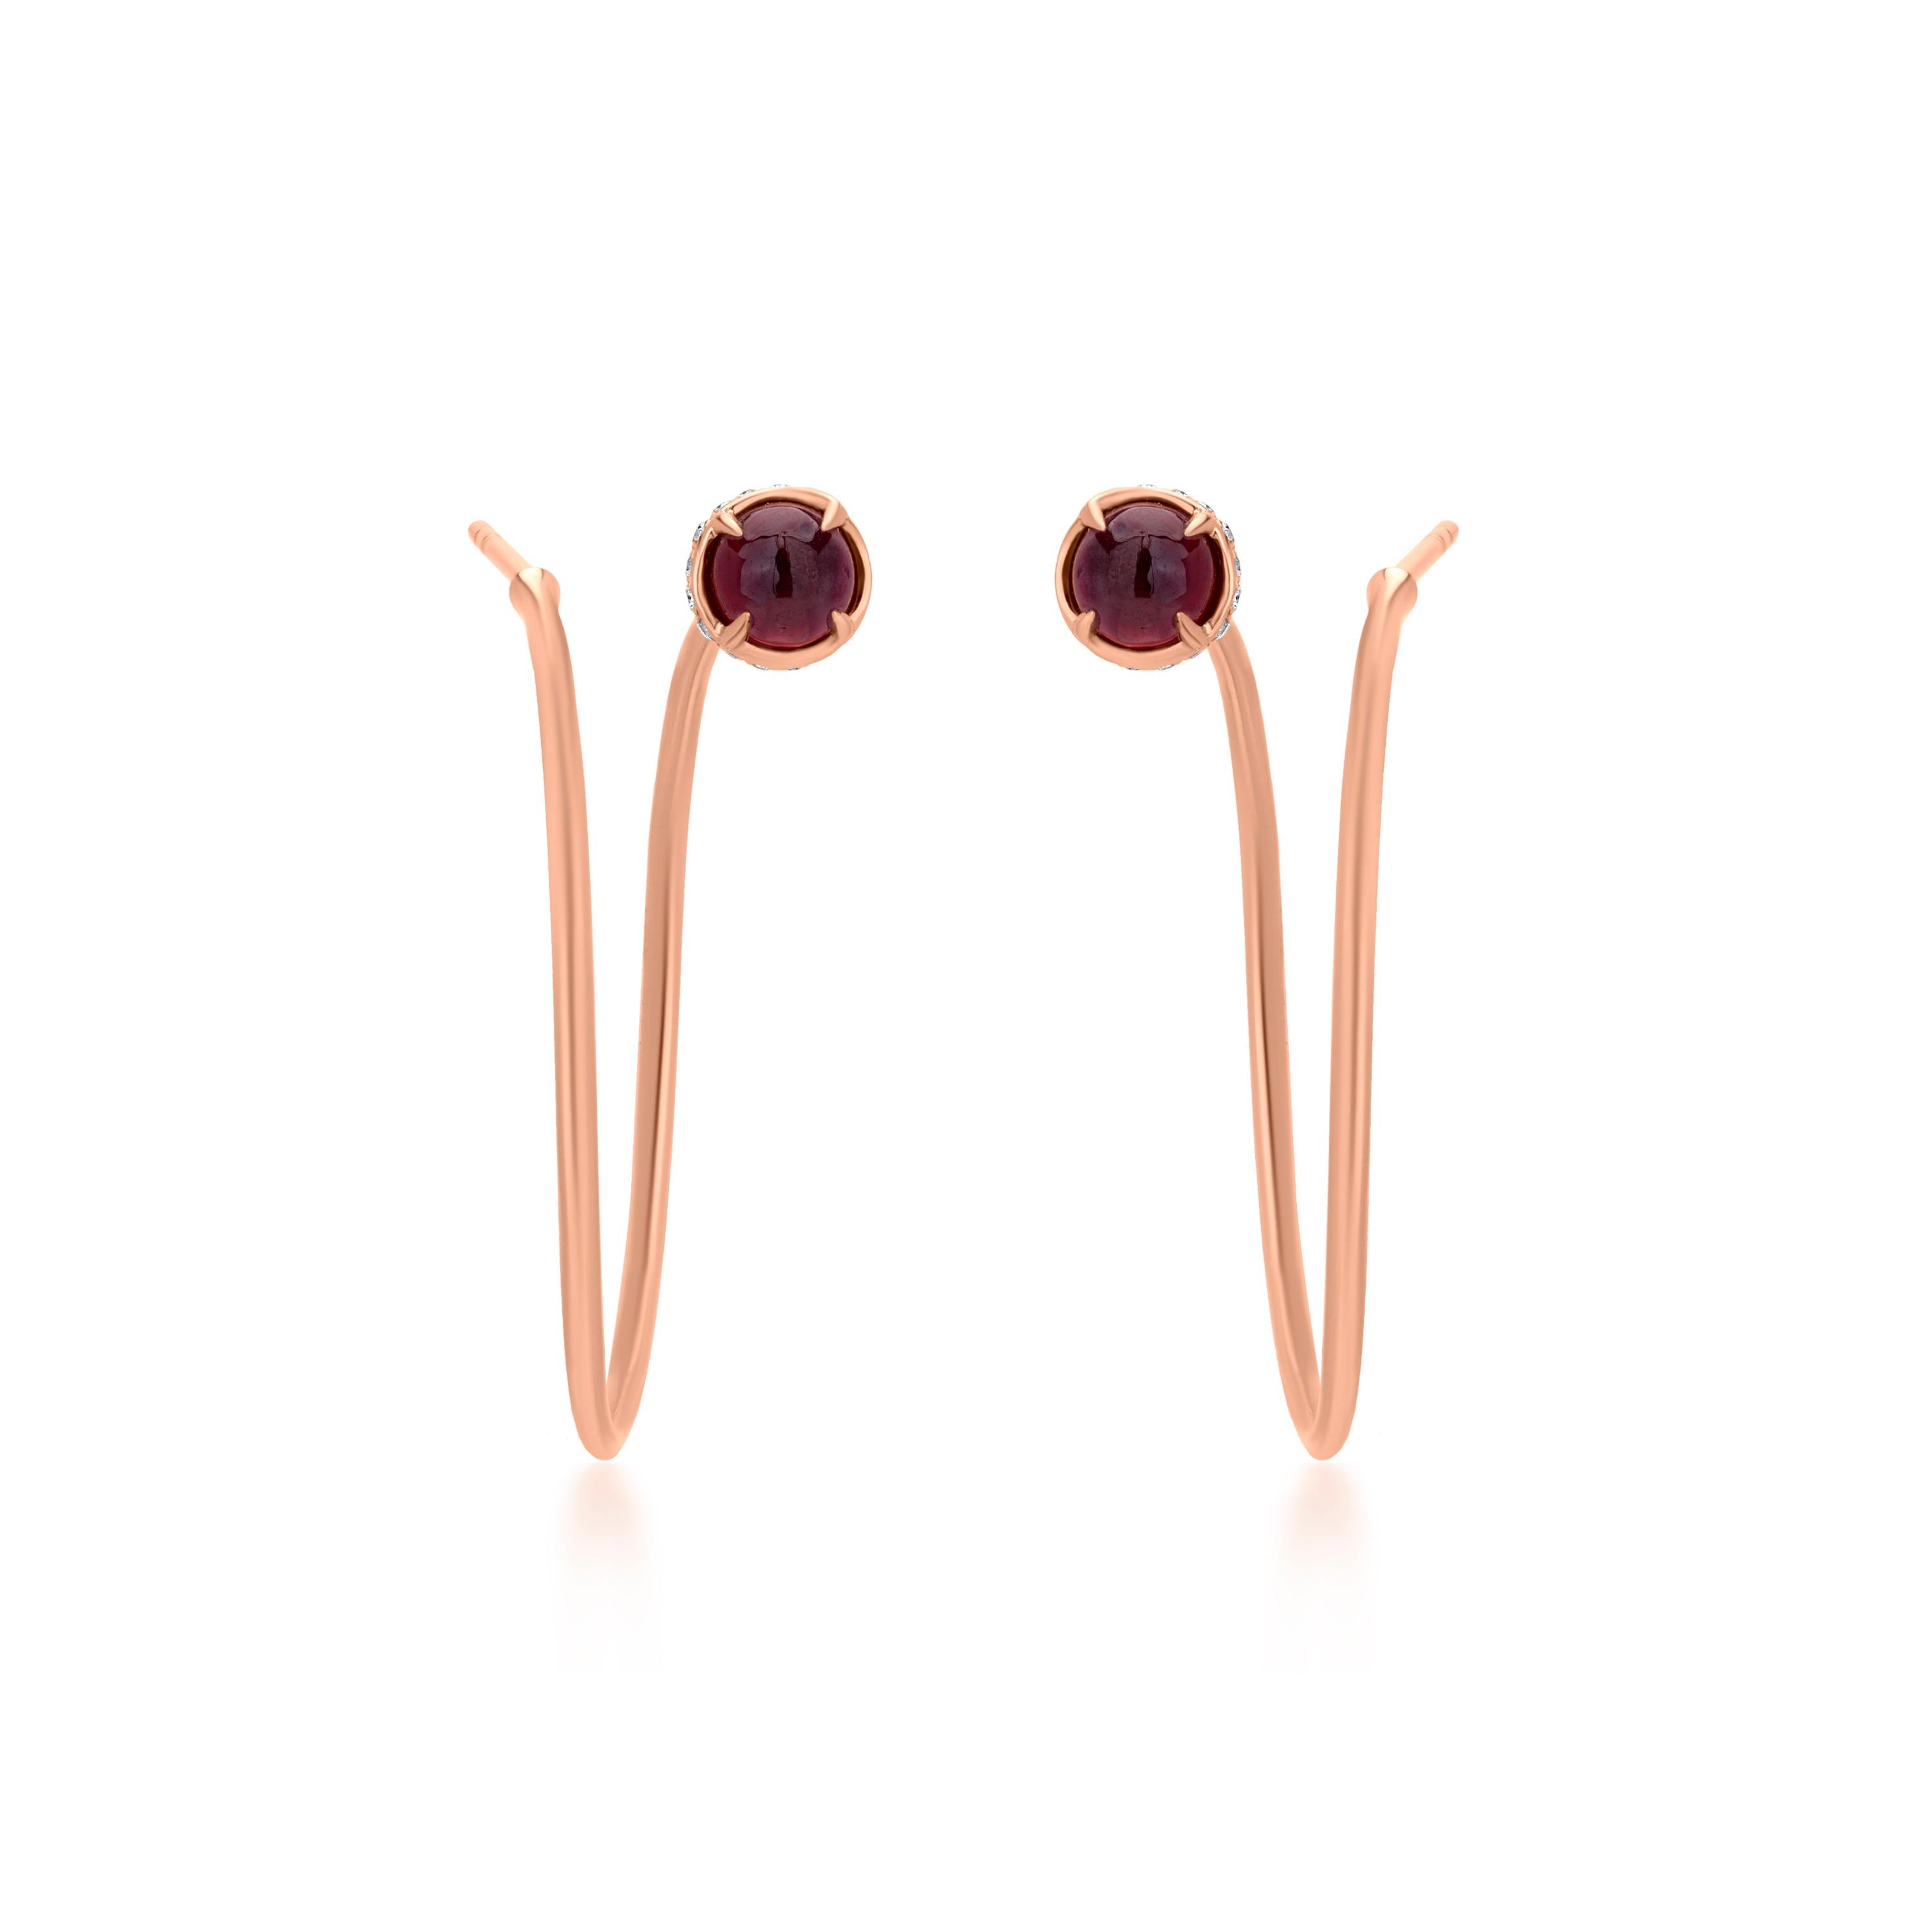 Round Cut Gemistry 2.57cttw. Ruby and Diamond Hoop Earrings in 18k Rose Gold